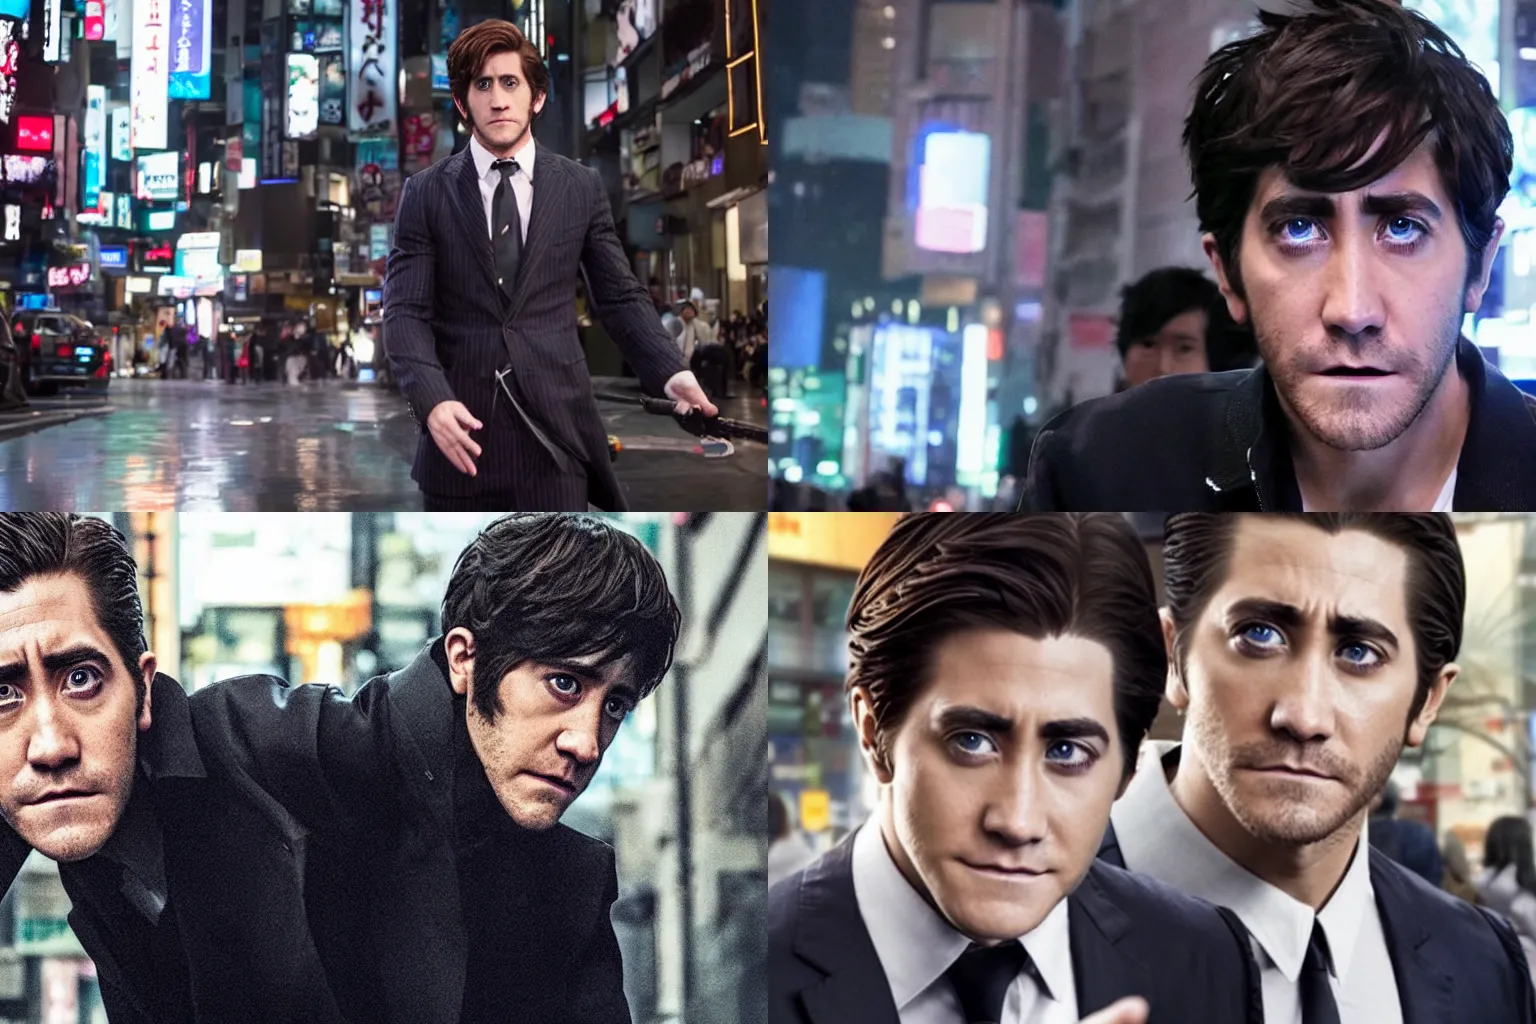 Prompt: Jake Gyllenhaal playing Yusuke Kitagawa in a live action adaptation of Persona 5, film still, shibuya, artistic,